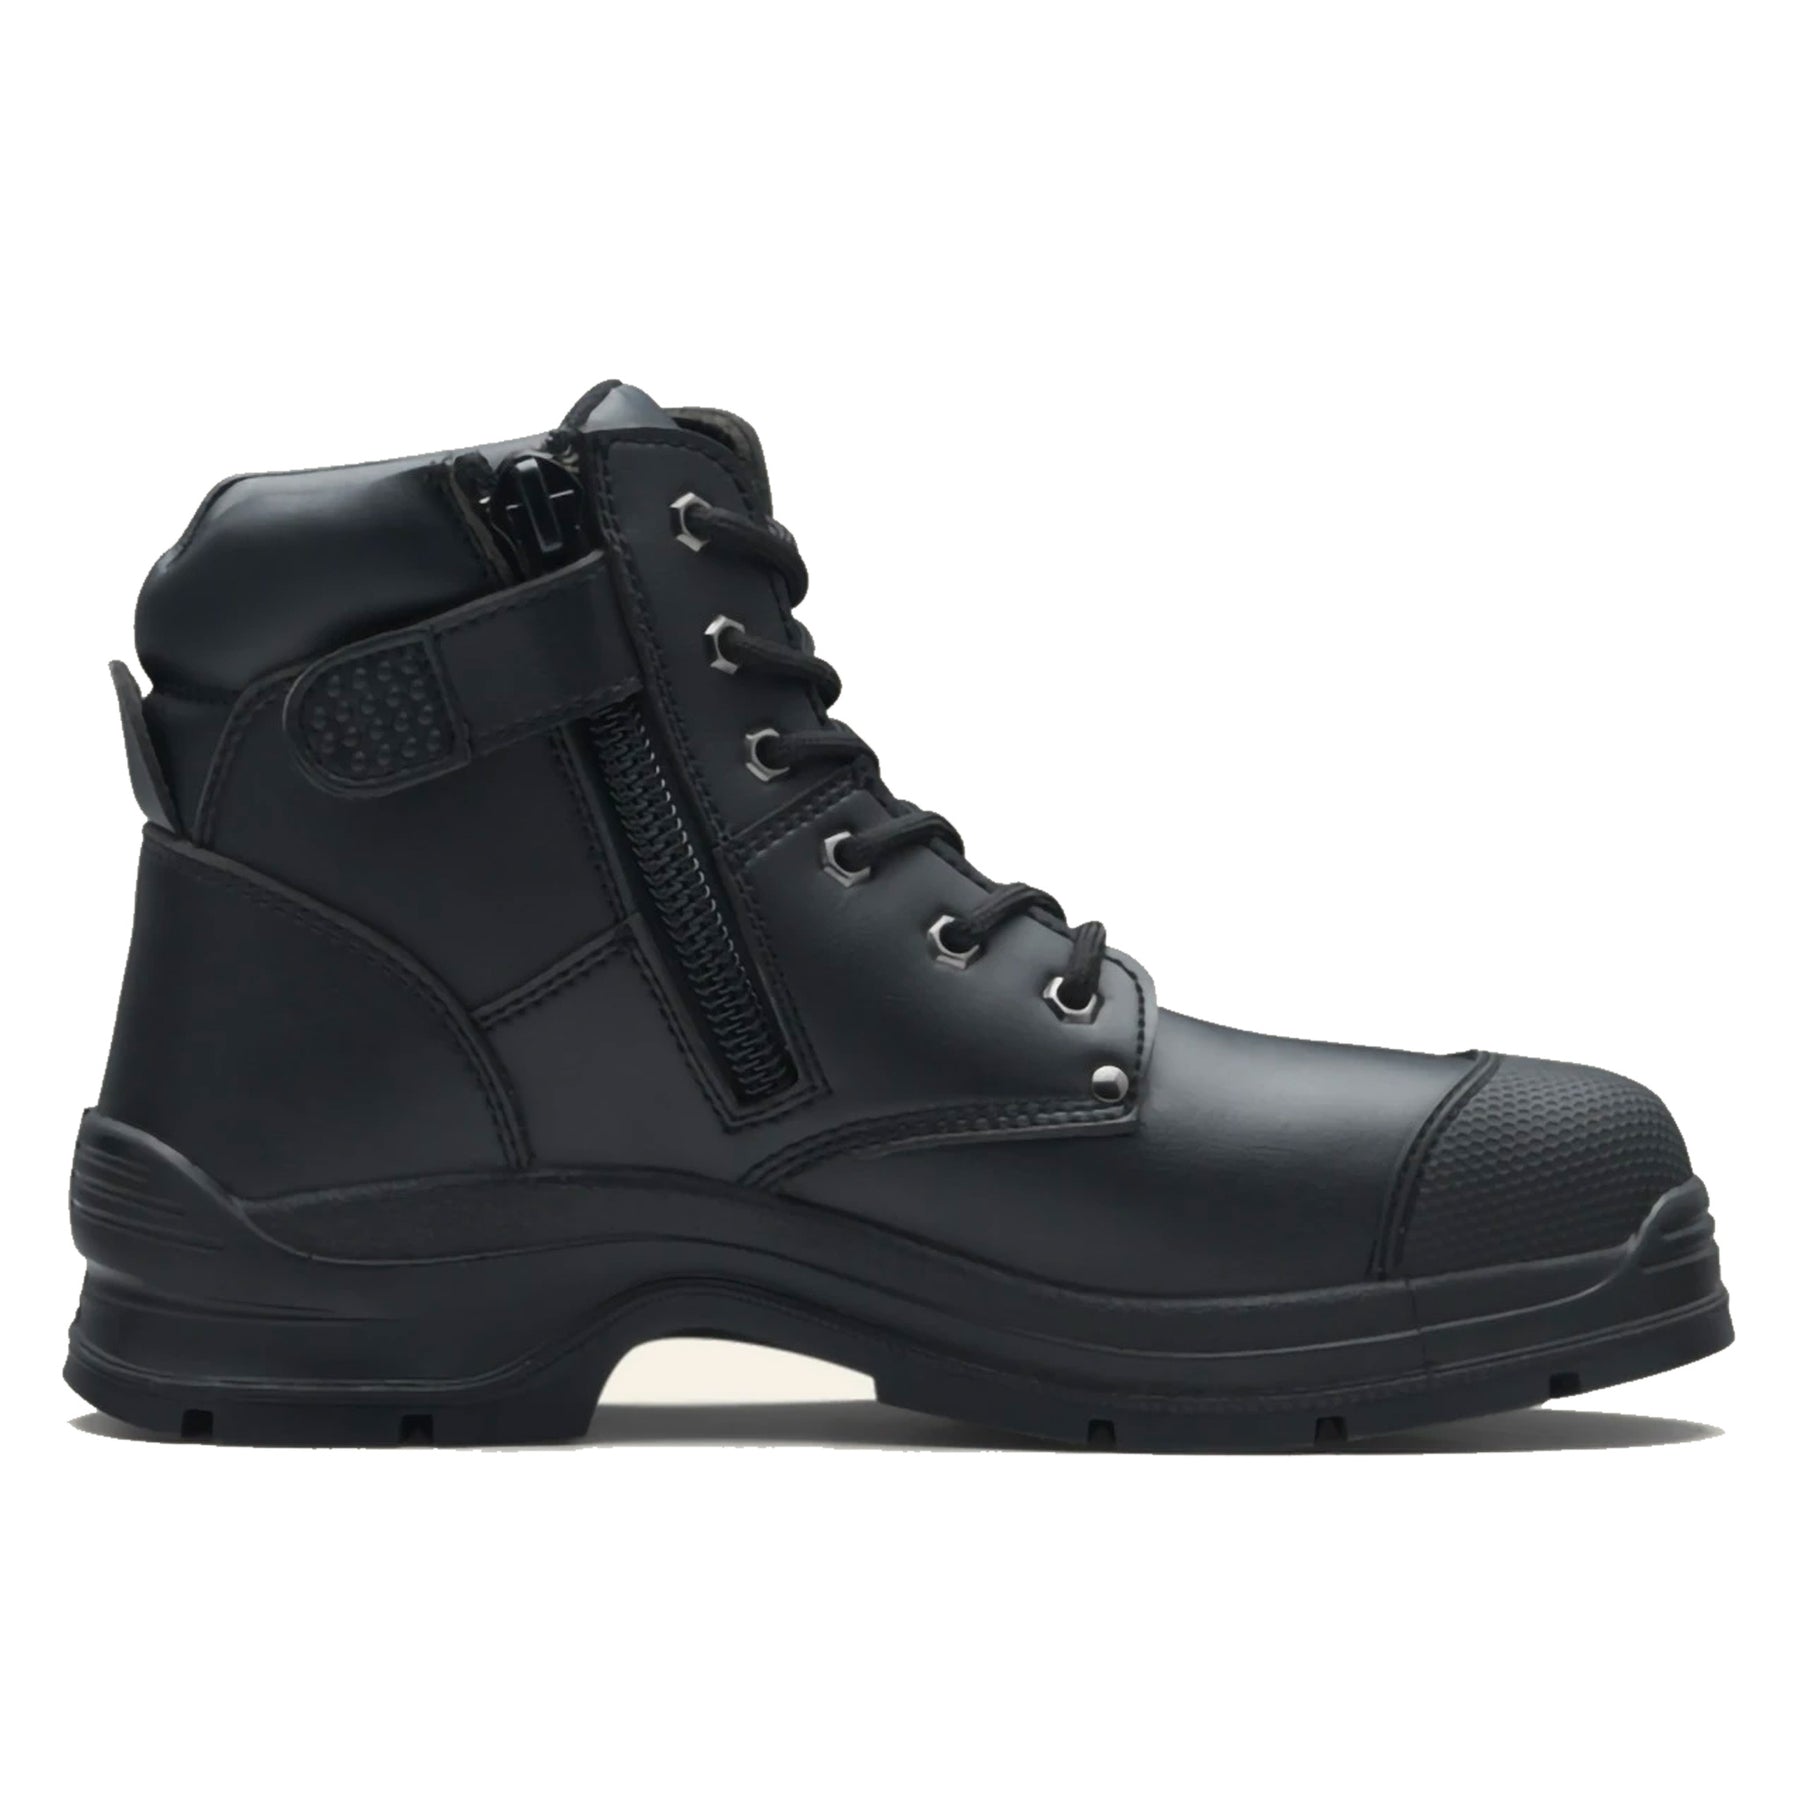 blundstone 322 zip safety boot in black